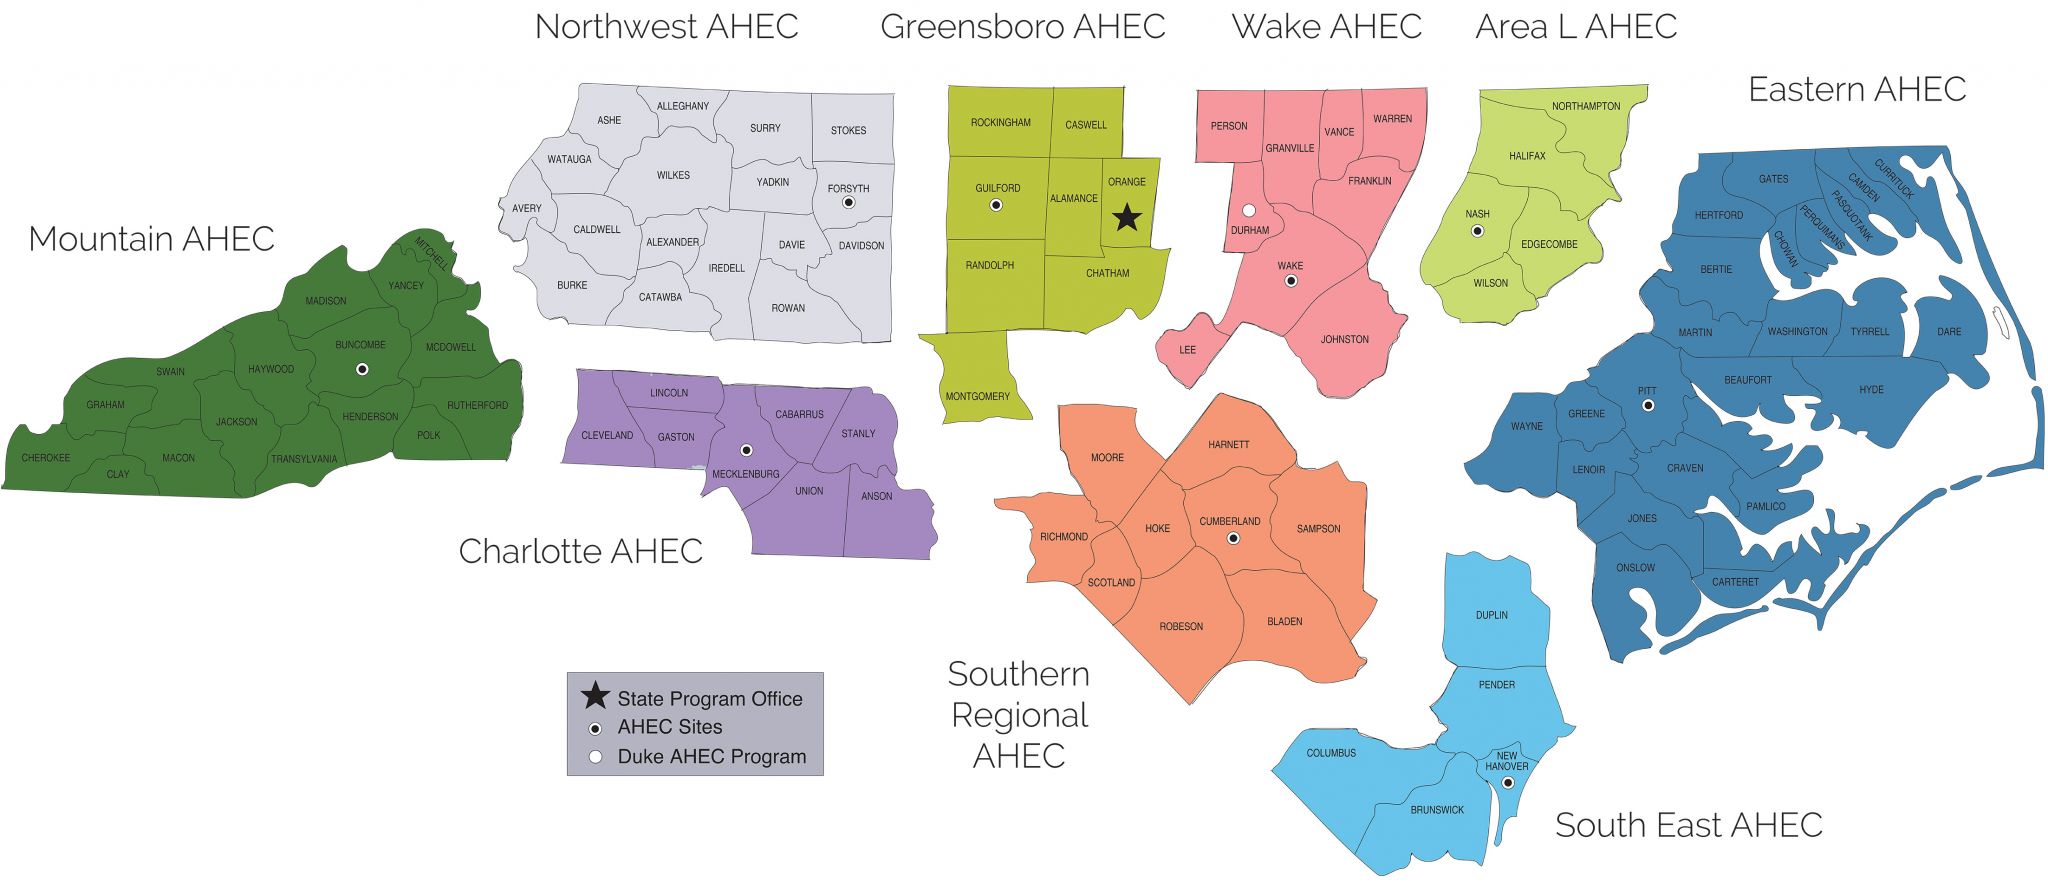 Regional AHEC Locations